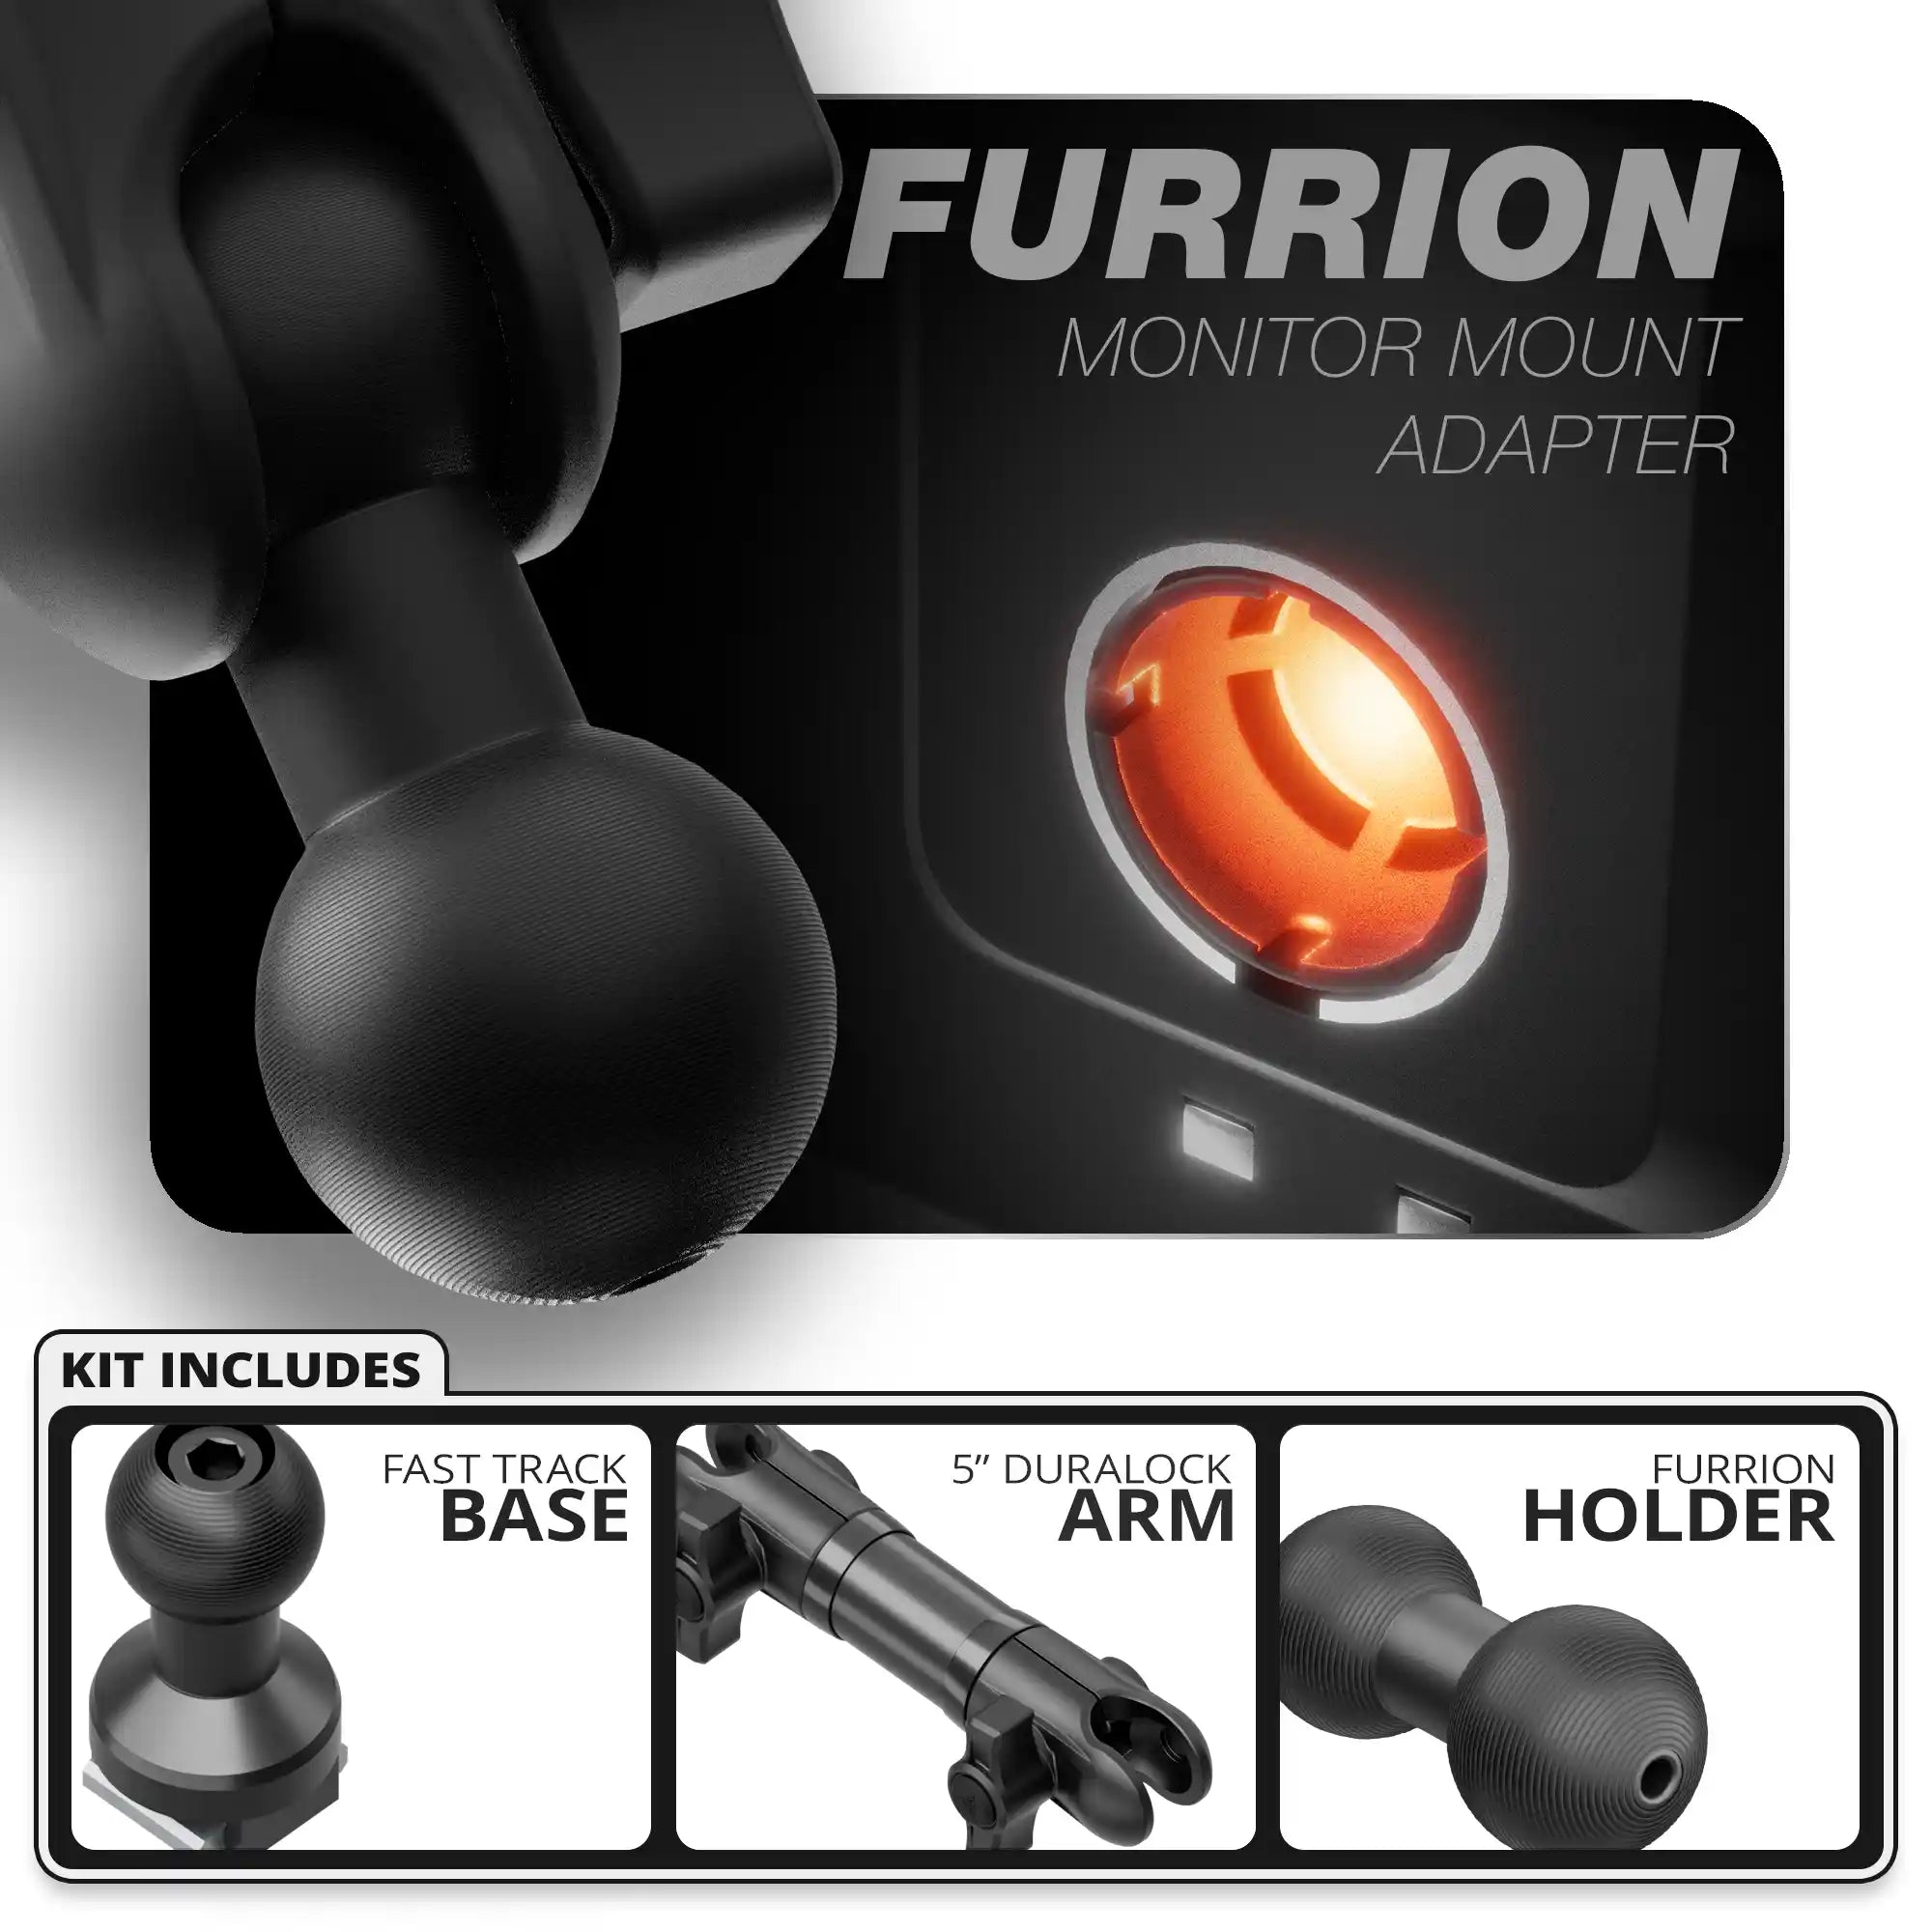 Furrion | Fast Track Base | 5" DuraLock Aluminum Tube Arm